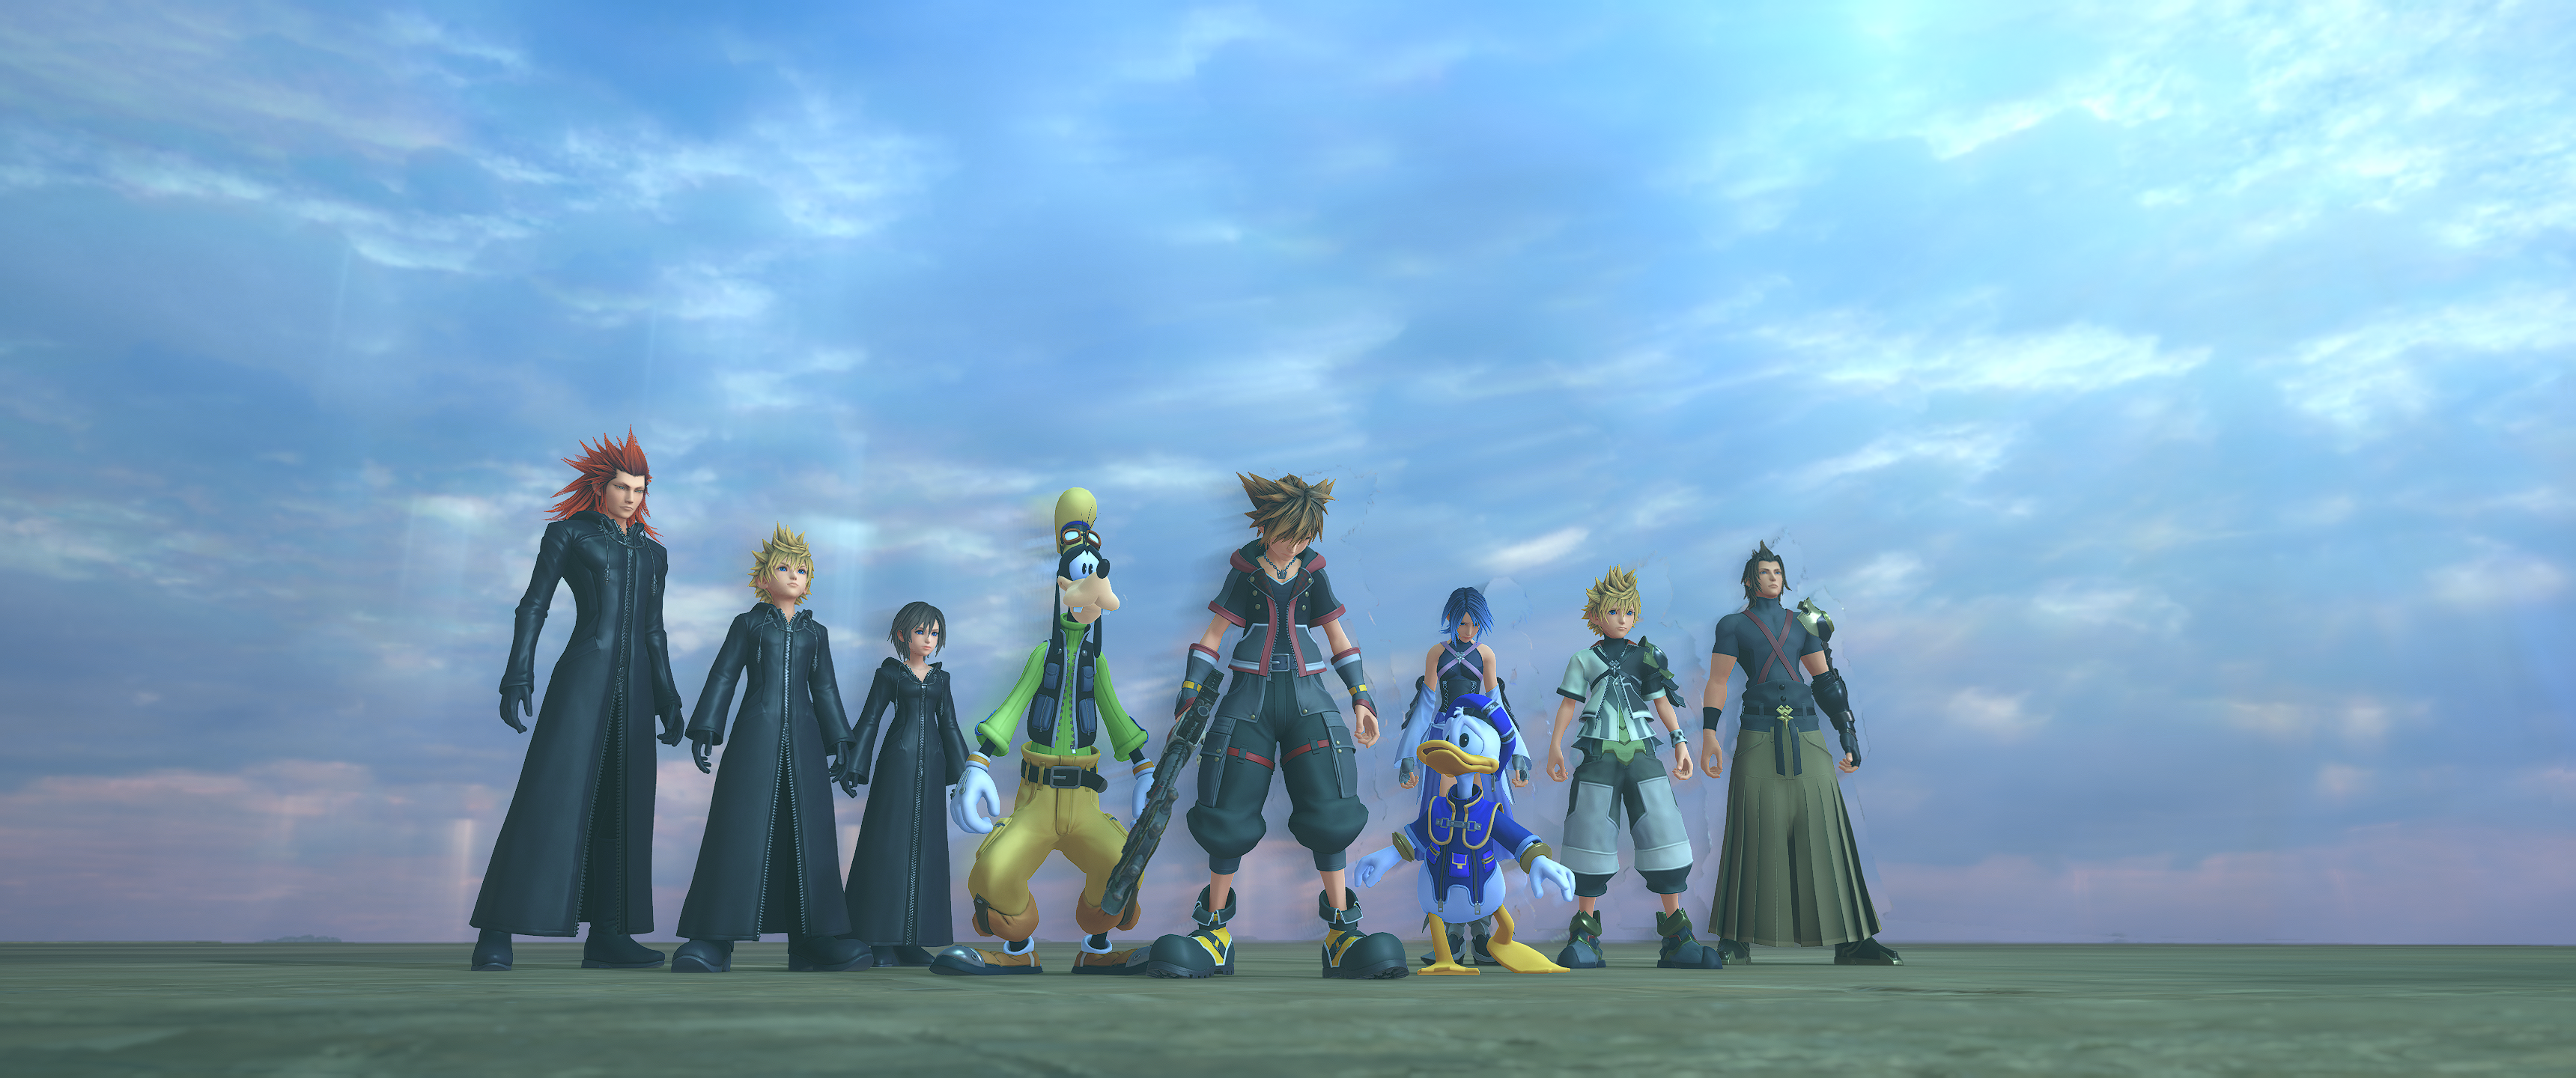 Video Game Kingdom Hearts III HD Wallpaper | Background Image